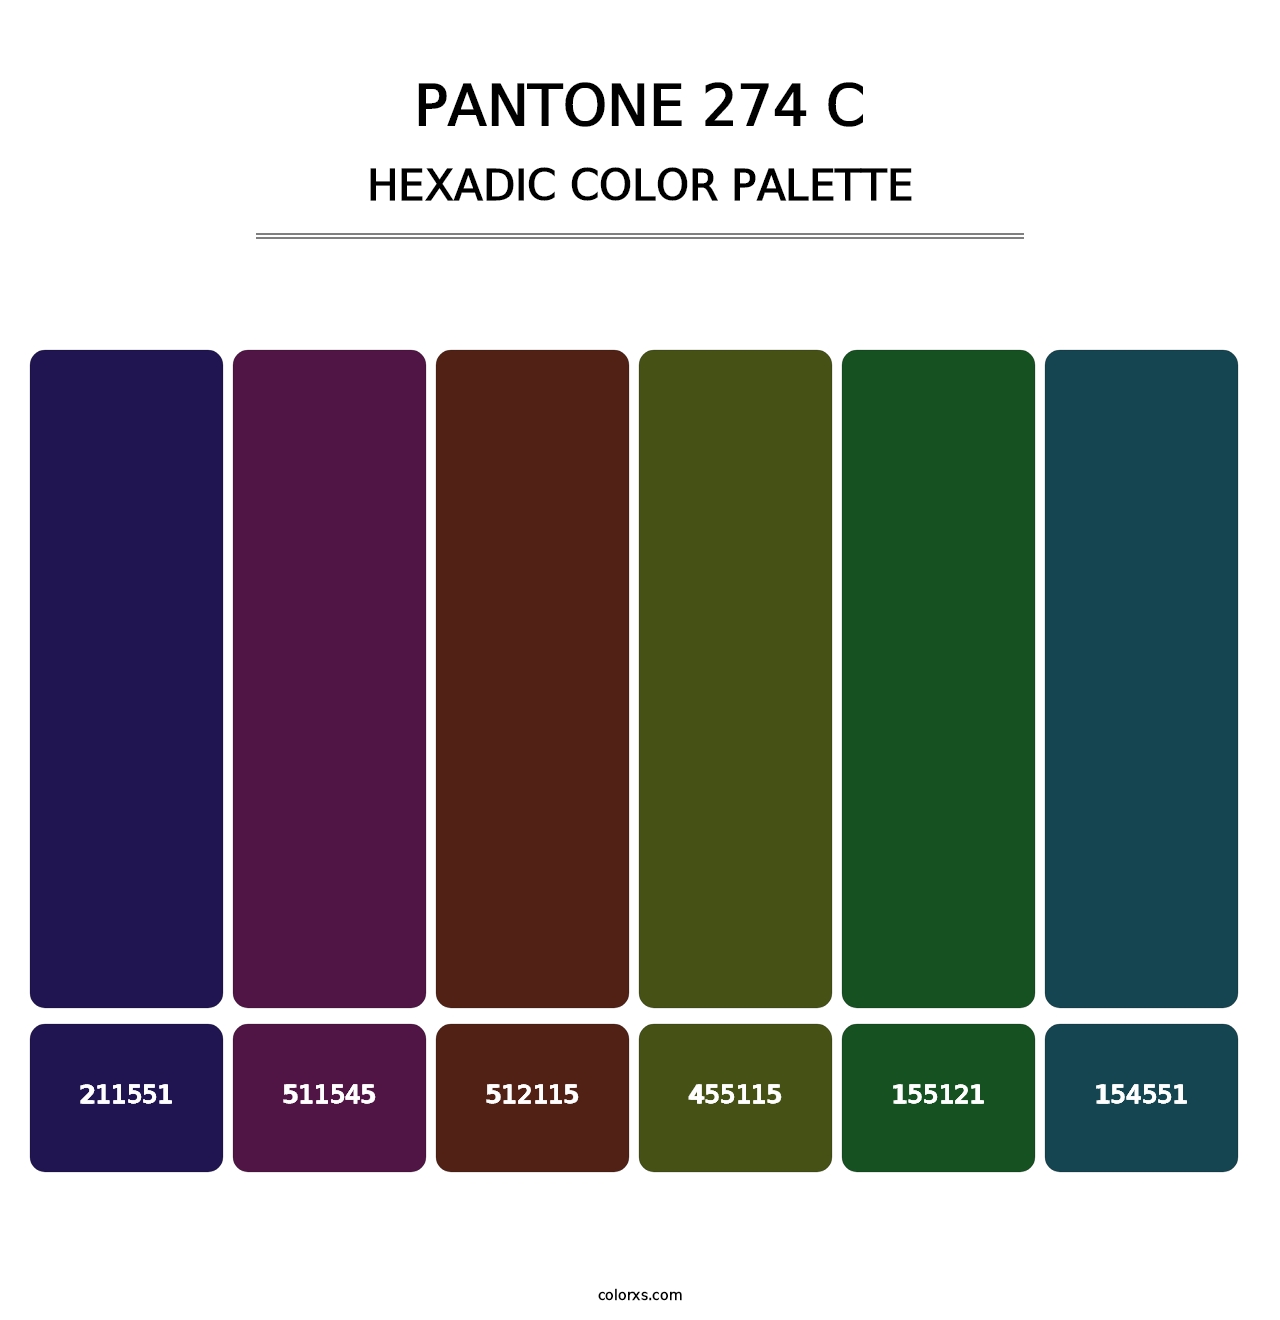 PANTONE 274 C - Hexadic Color Palette